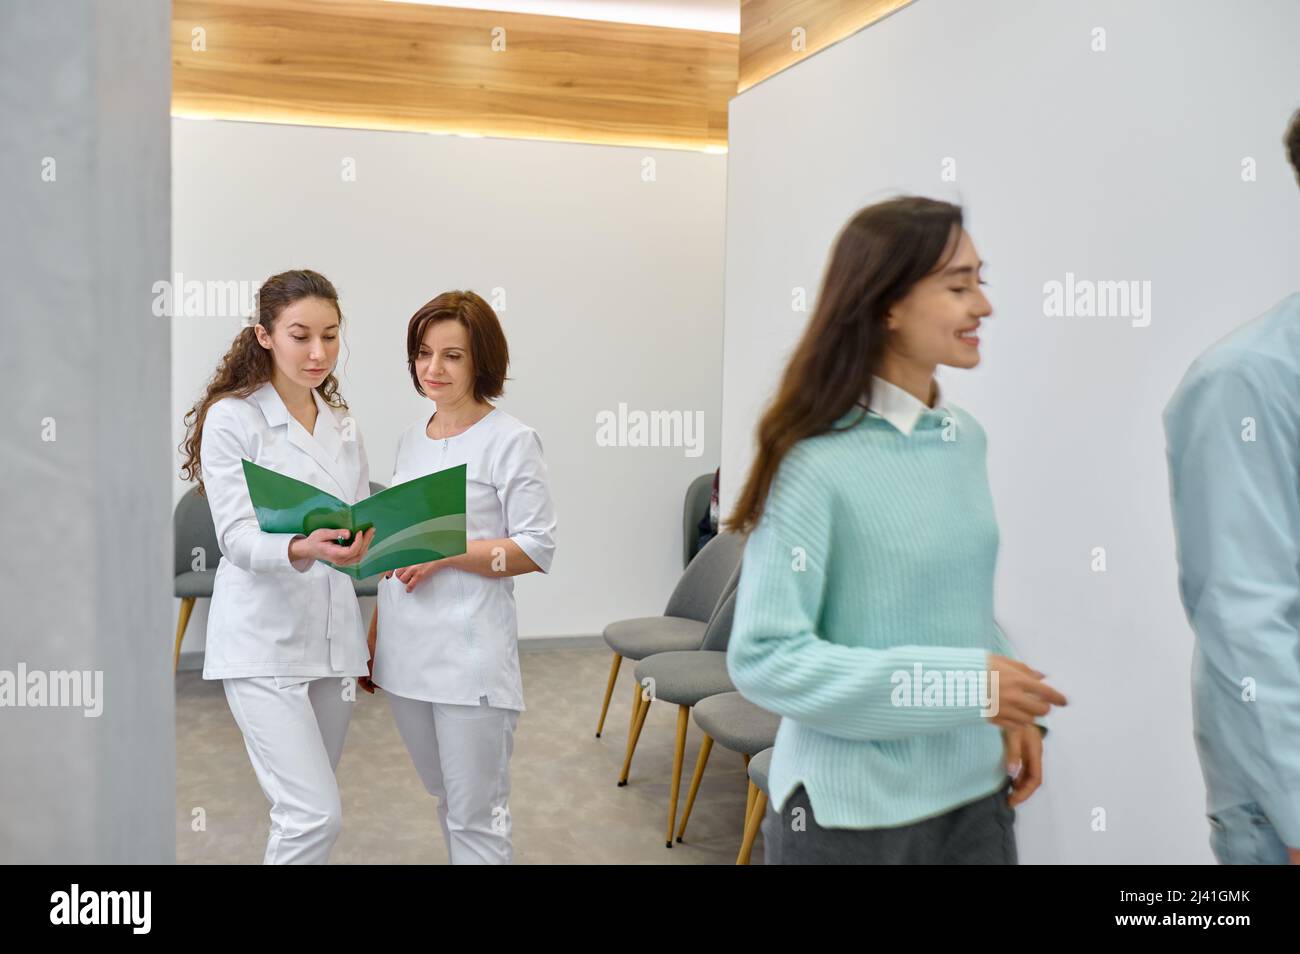 Two nurses discussing medical document in corridor Stock Photo